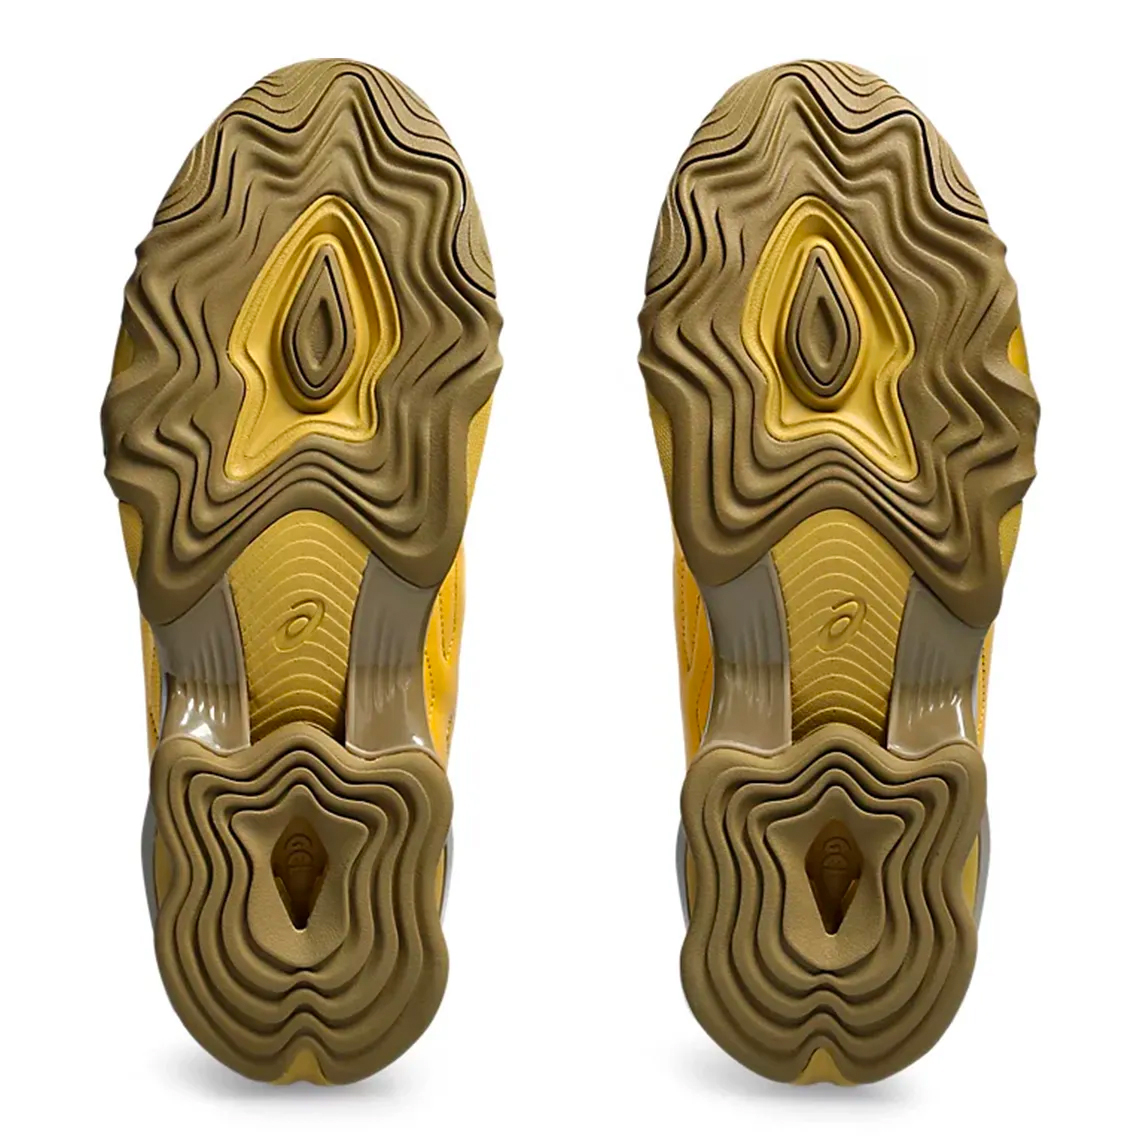 Kiko Kostadinov x ASICS NOVALIS GEL-TEREMOA 鞋款发售在即– NOWRE现客